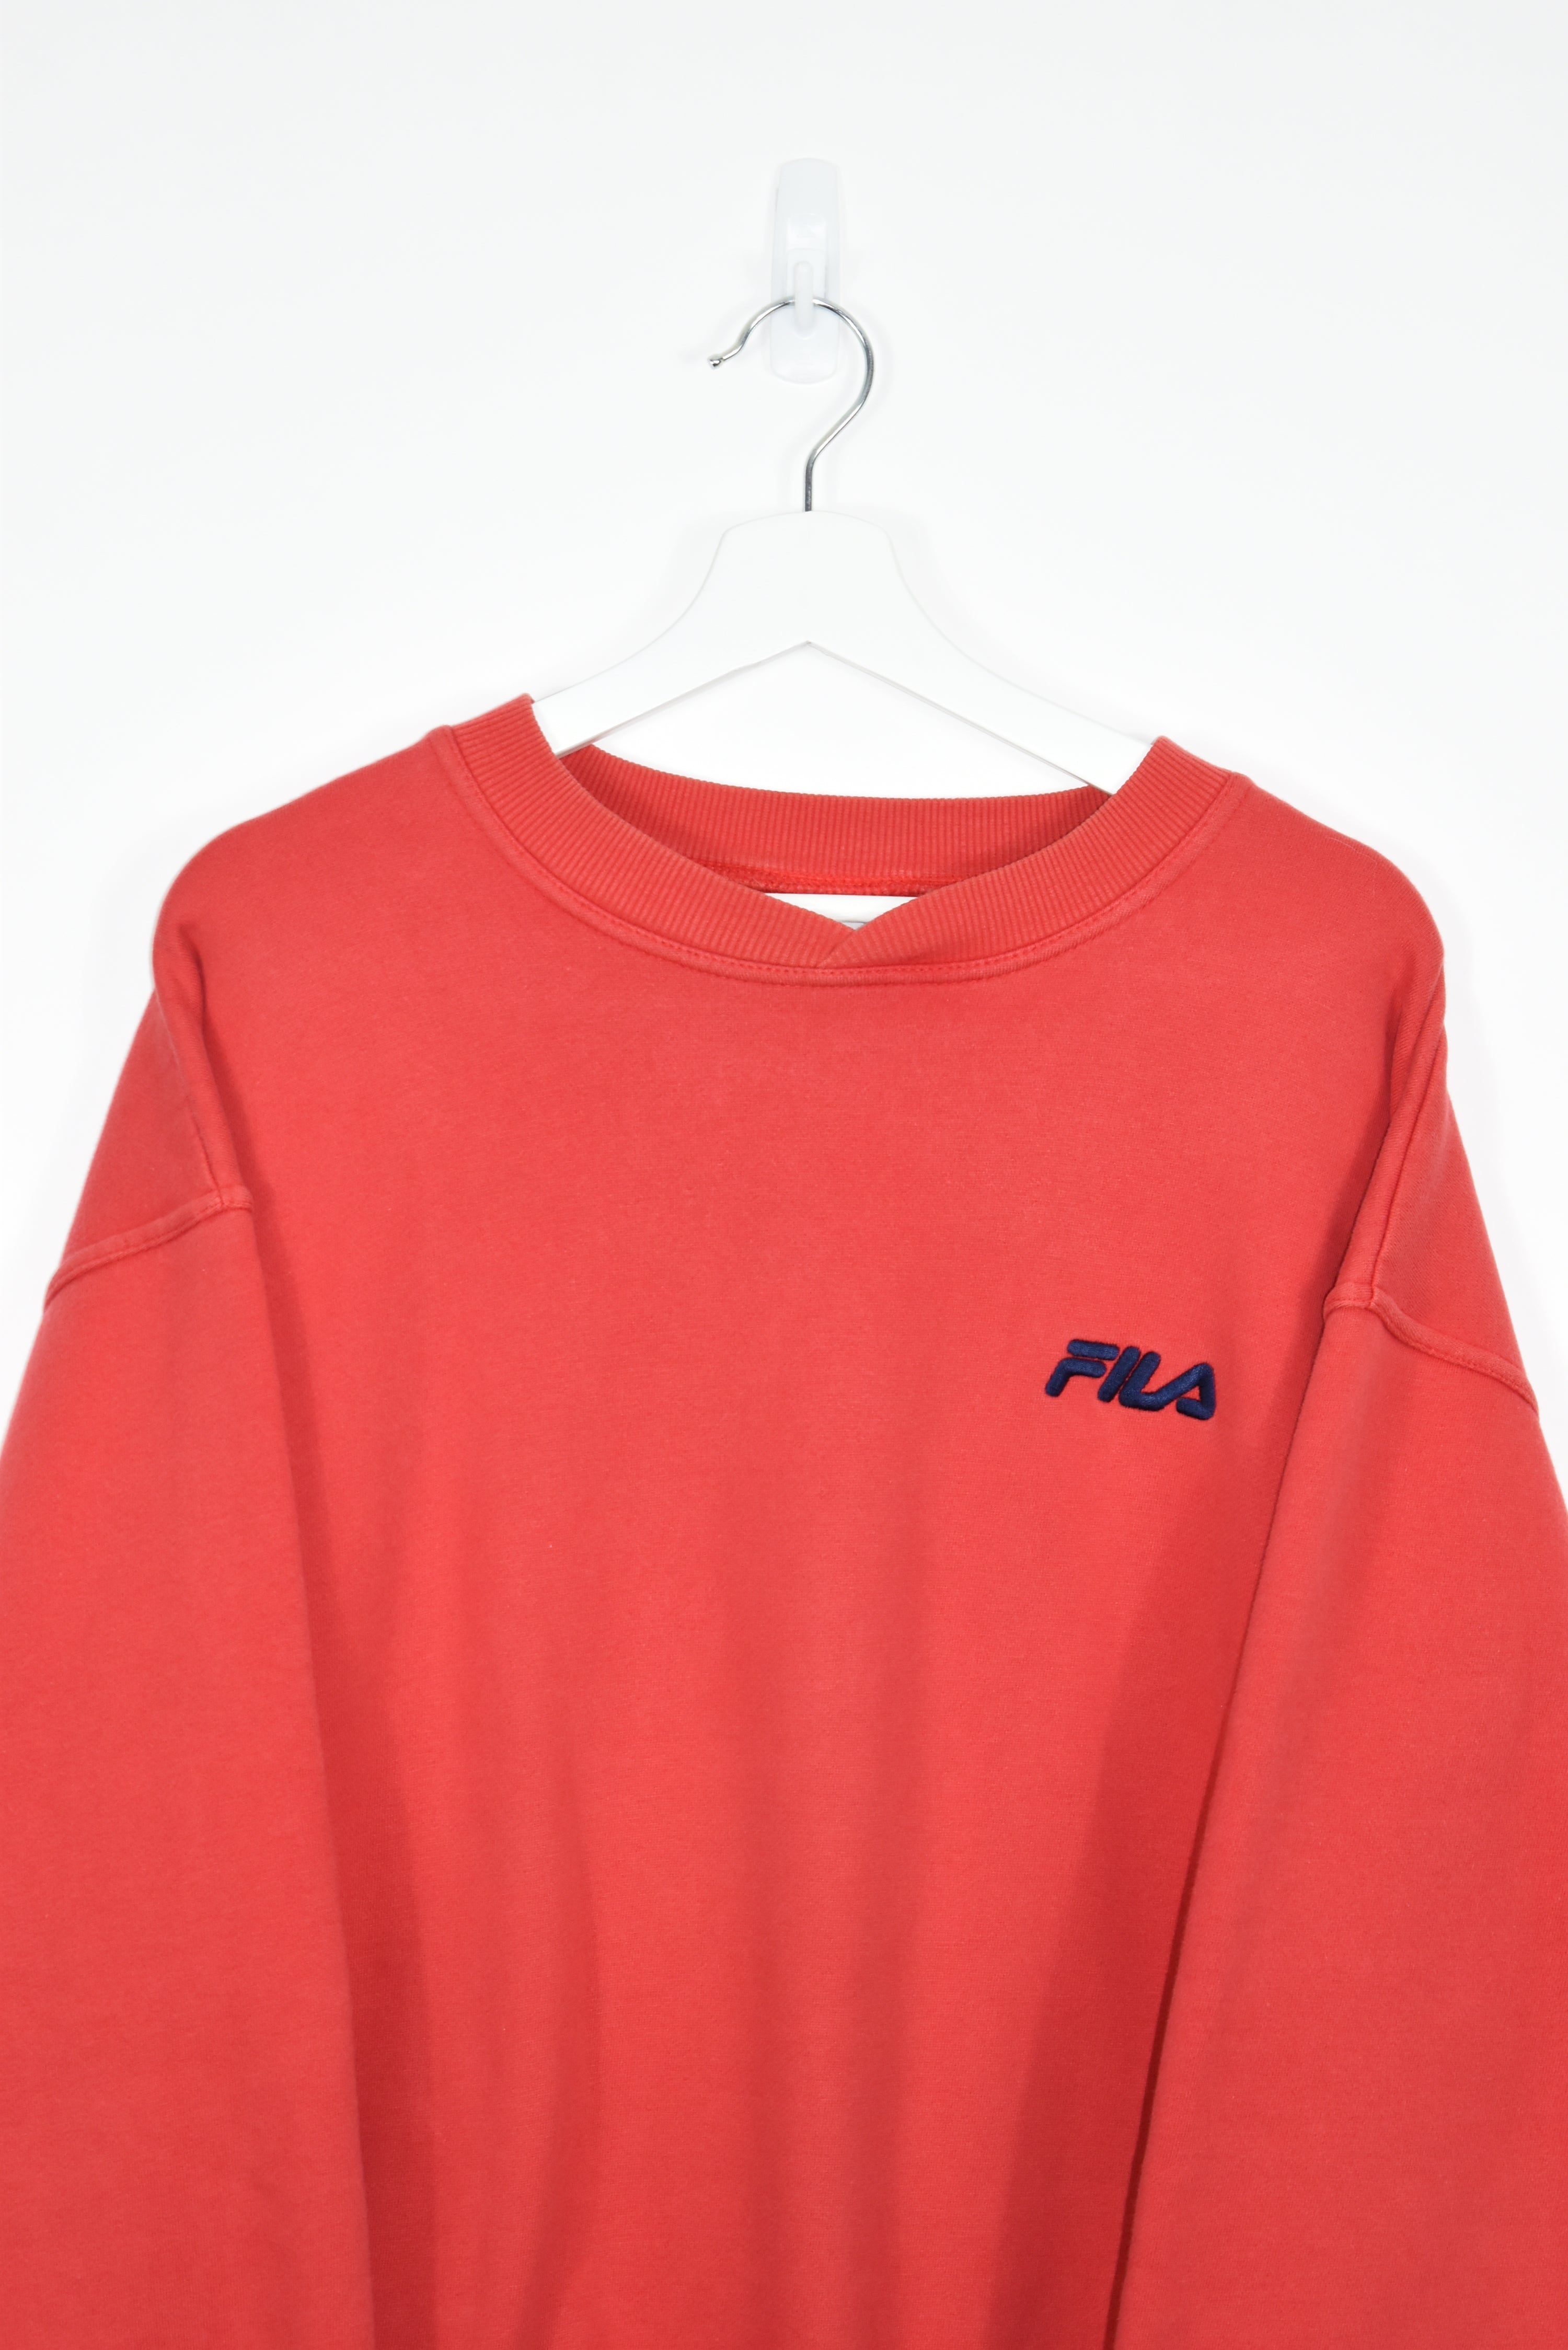 Vintage Fila Embroidery Logo Sweatshirt Large